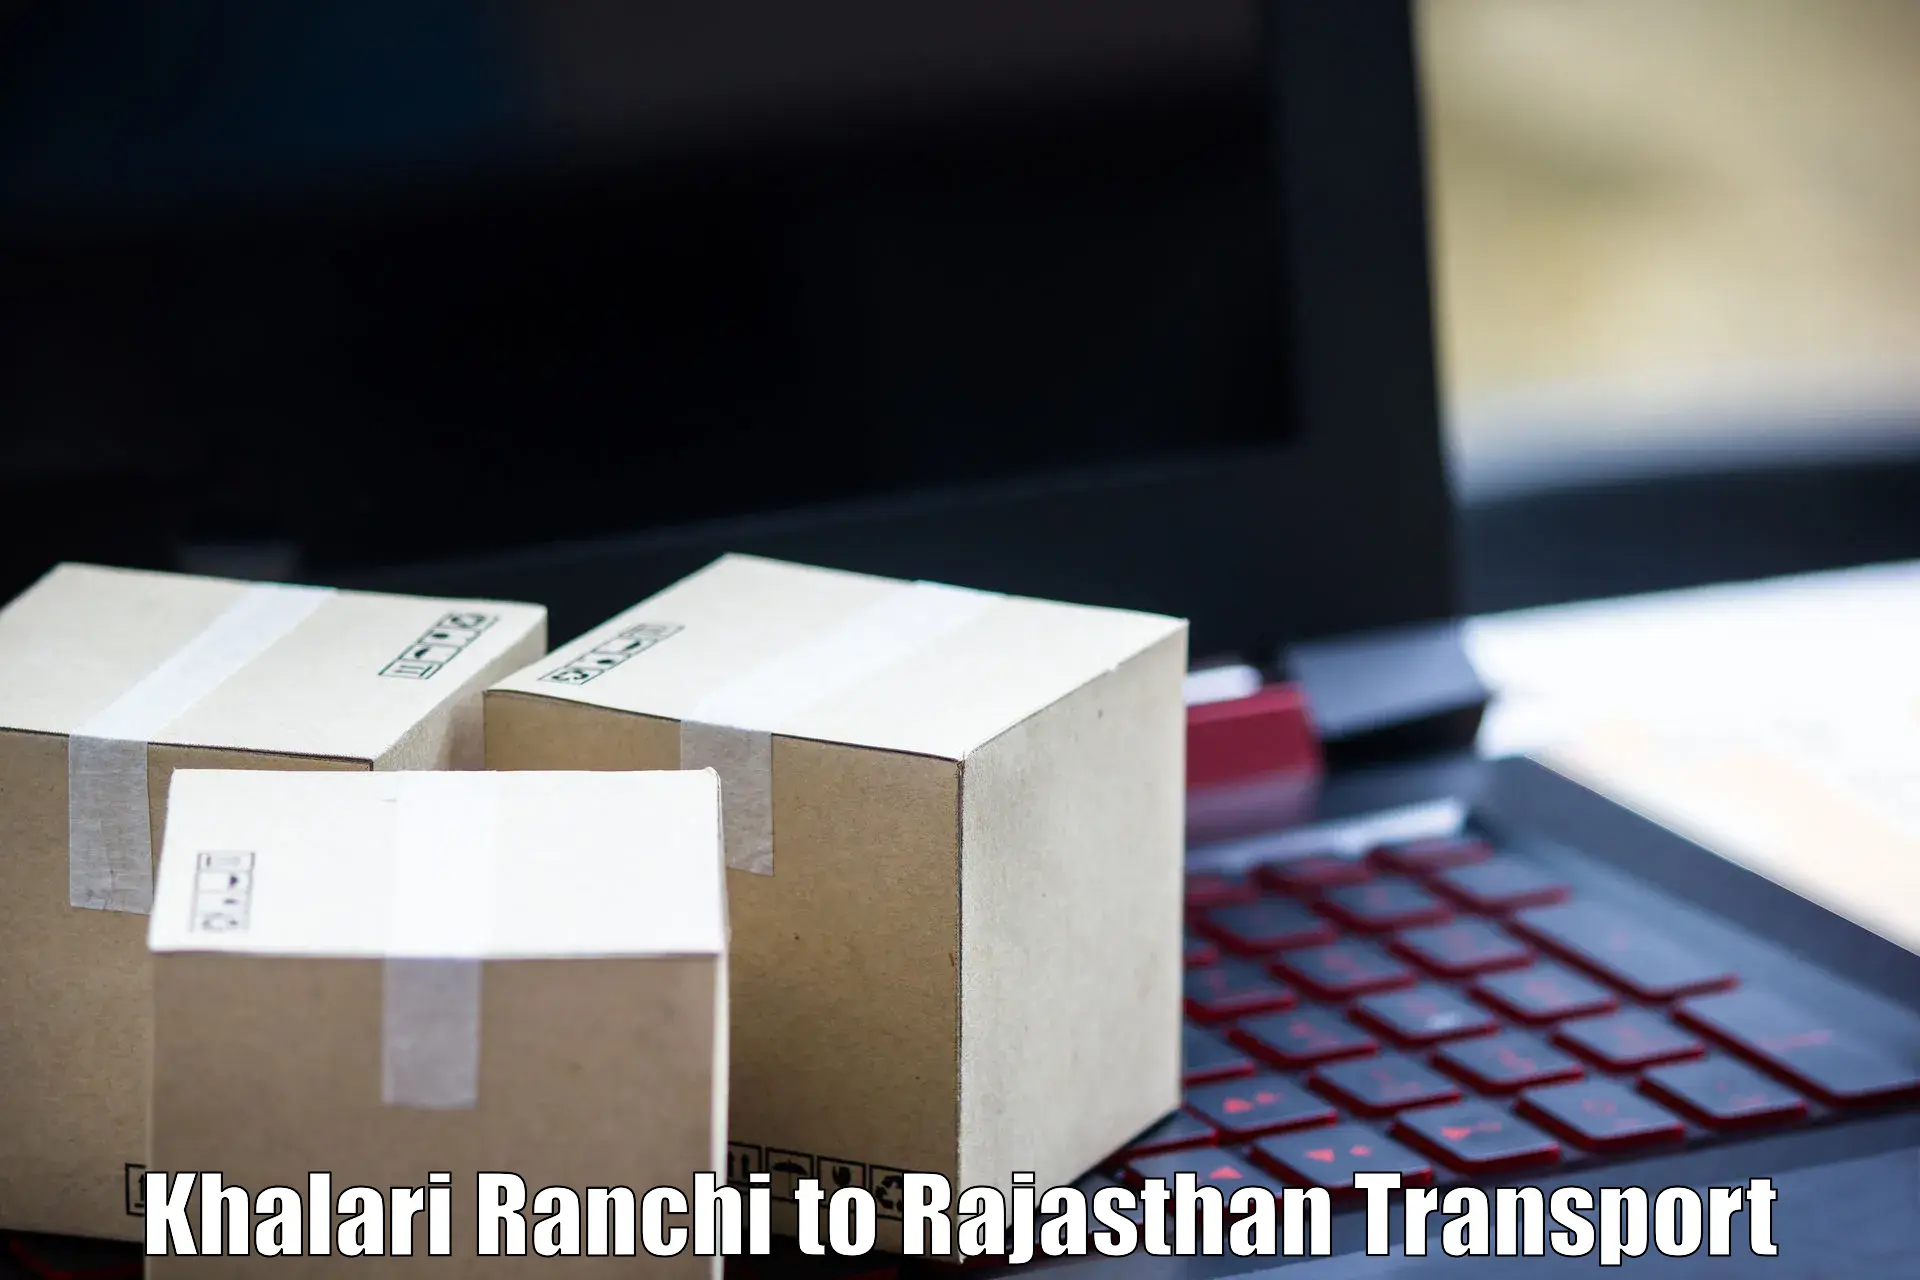 Nationwide transport services Khalari Ranchi to Udaipur